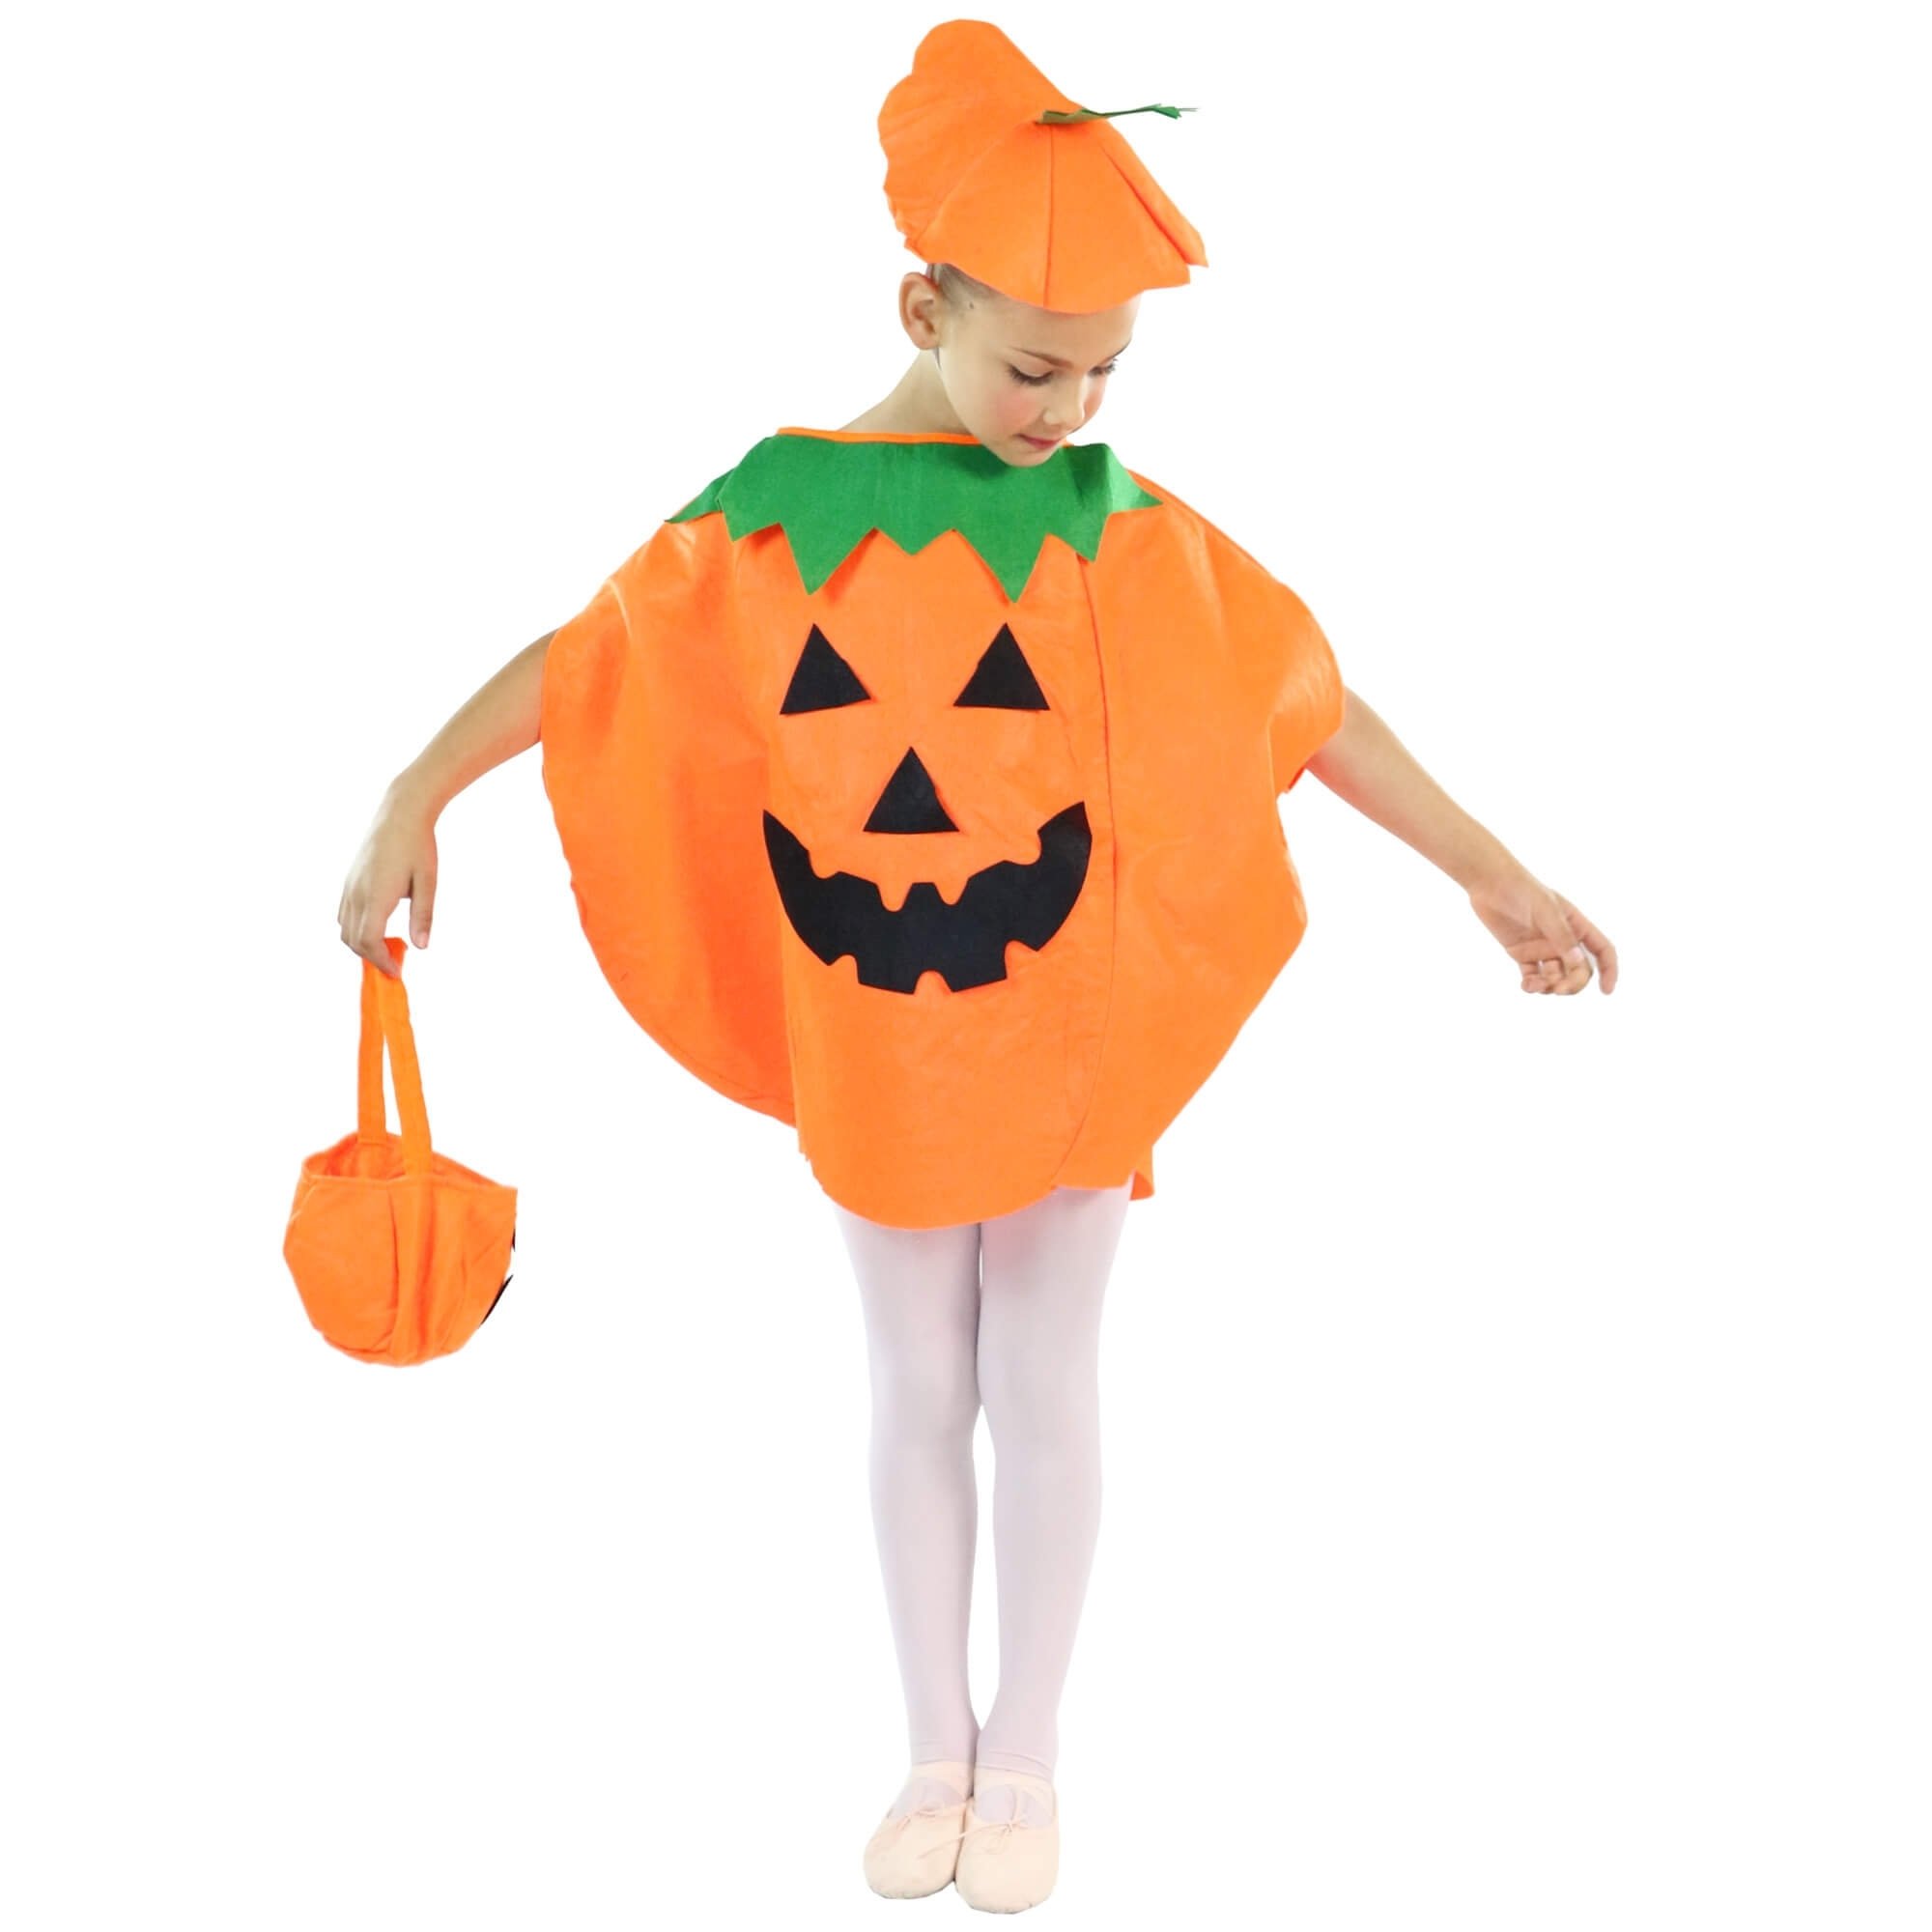 danzcue-child-halloween-pumpkin-costume-suit-with-hat-and-pumpkin-bag